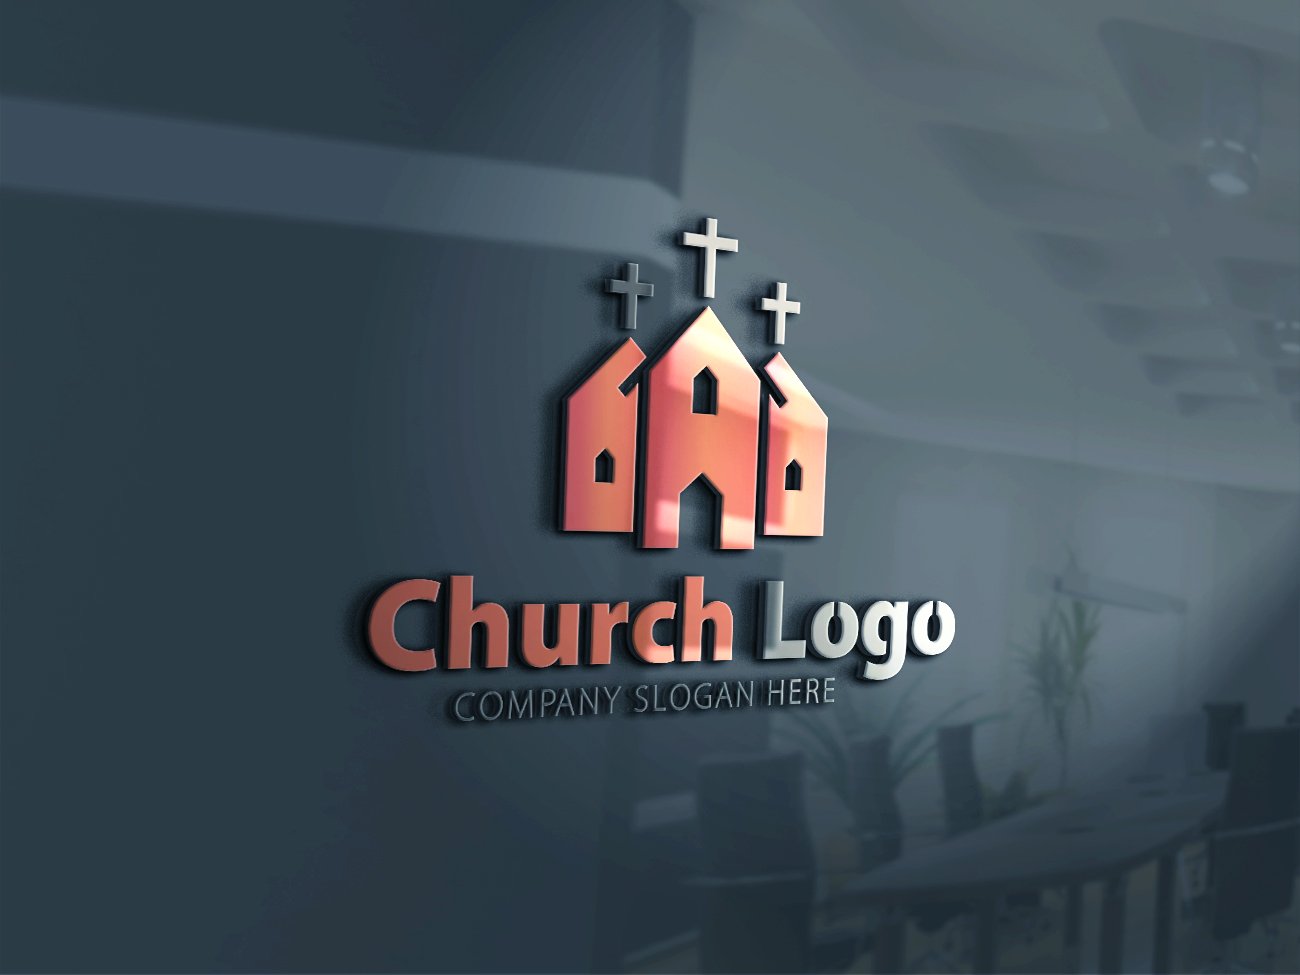 Grey background with church logo.